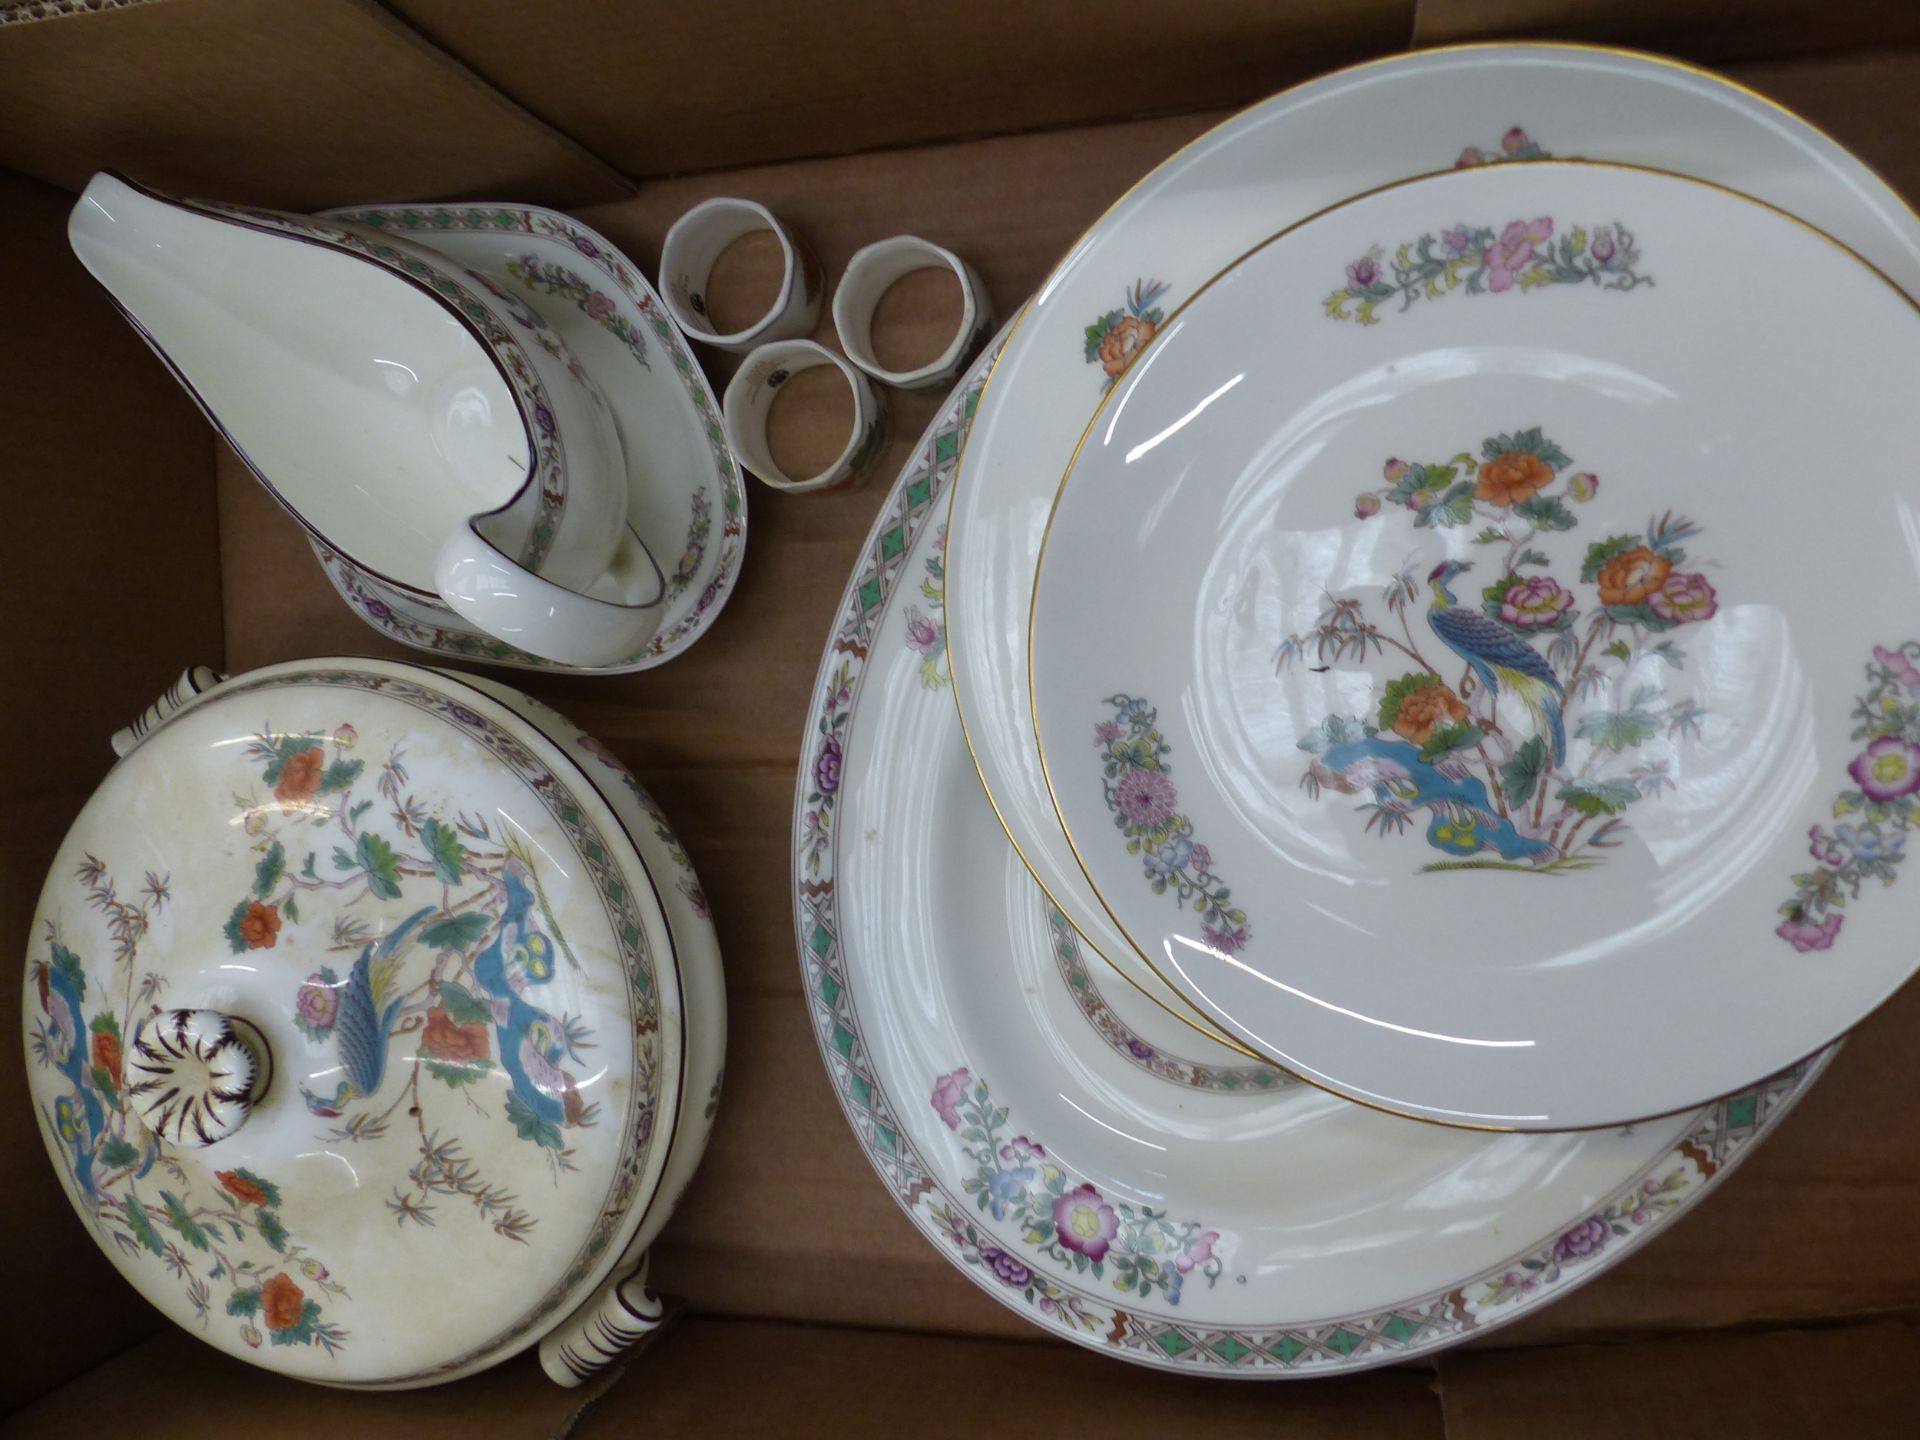 Wedgwood Kutani Crane pattern service ware items to include Lidded tureen, oval platter, gravy